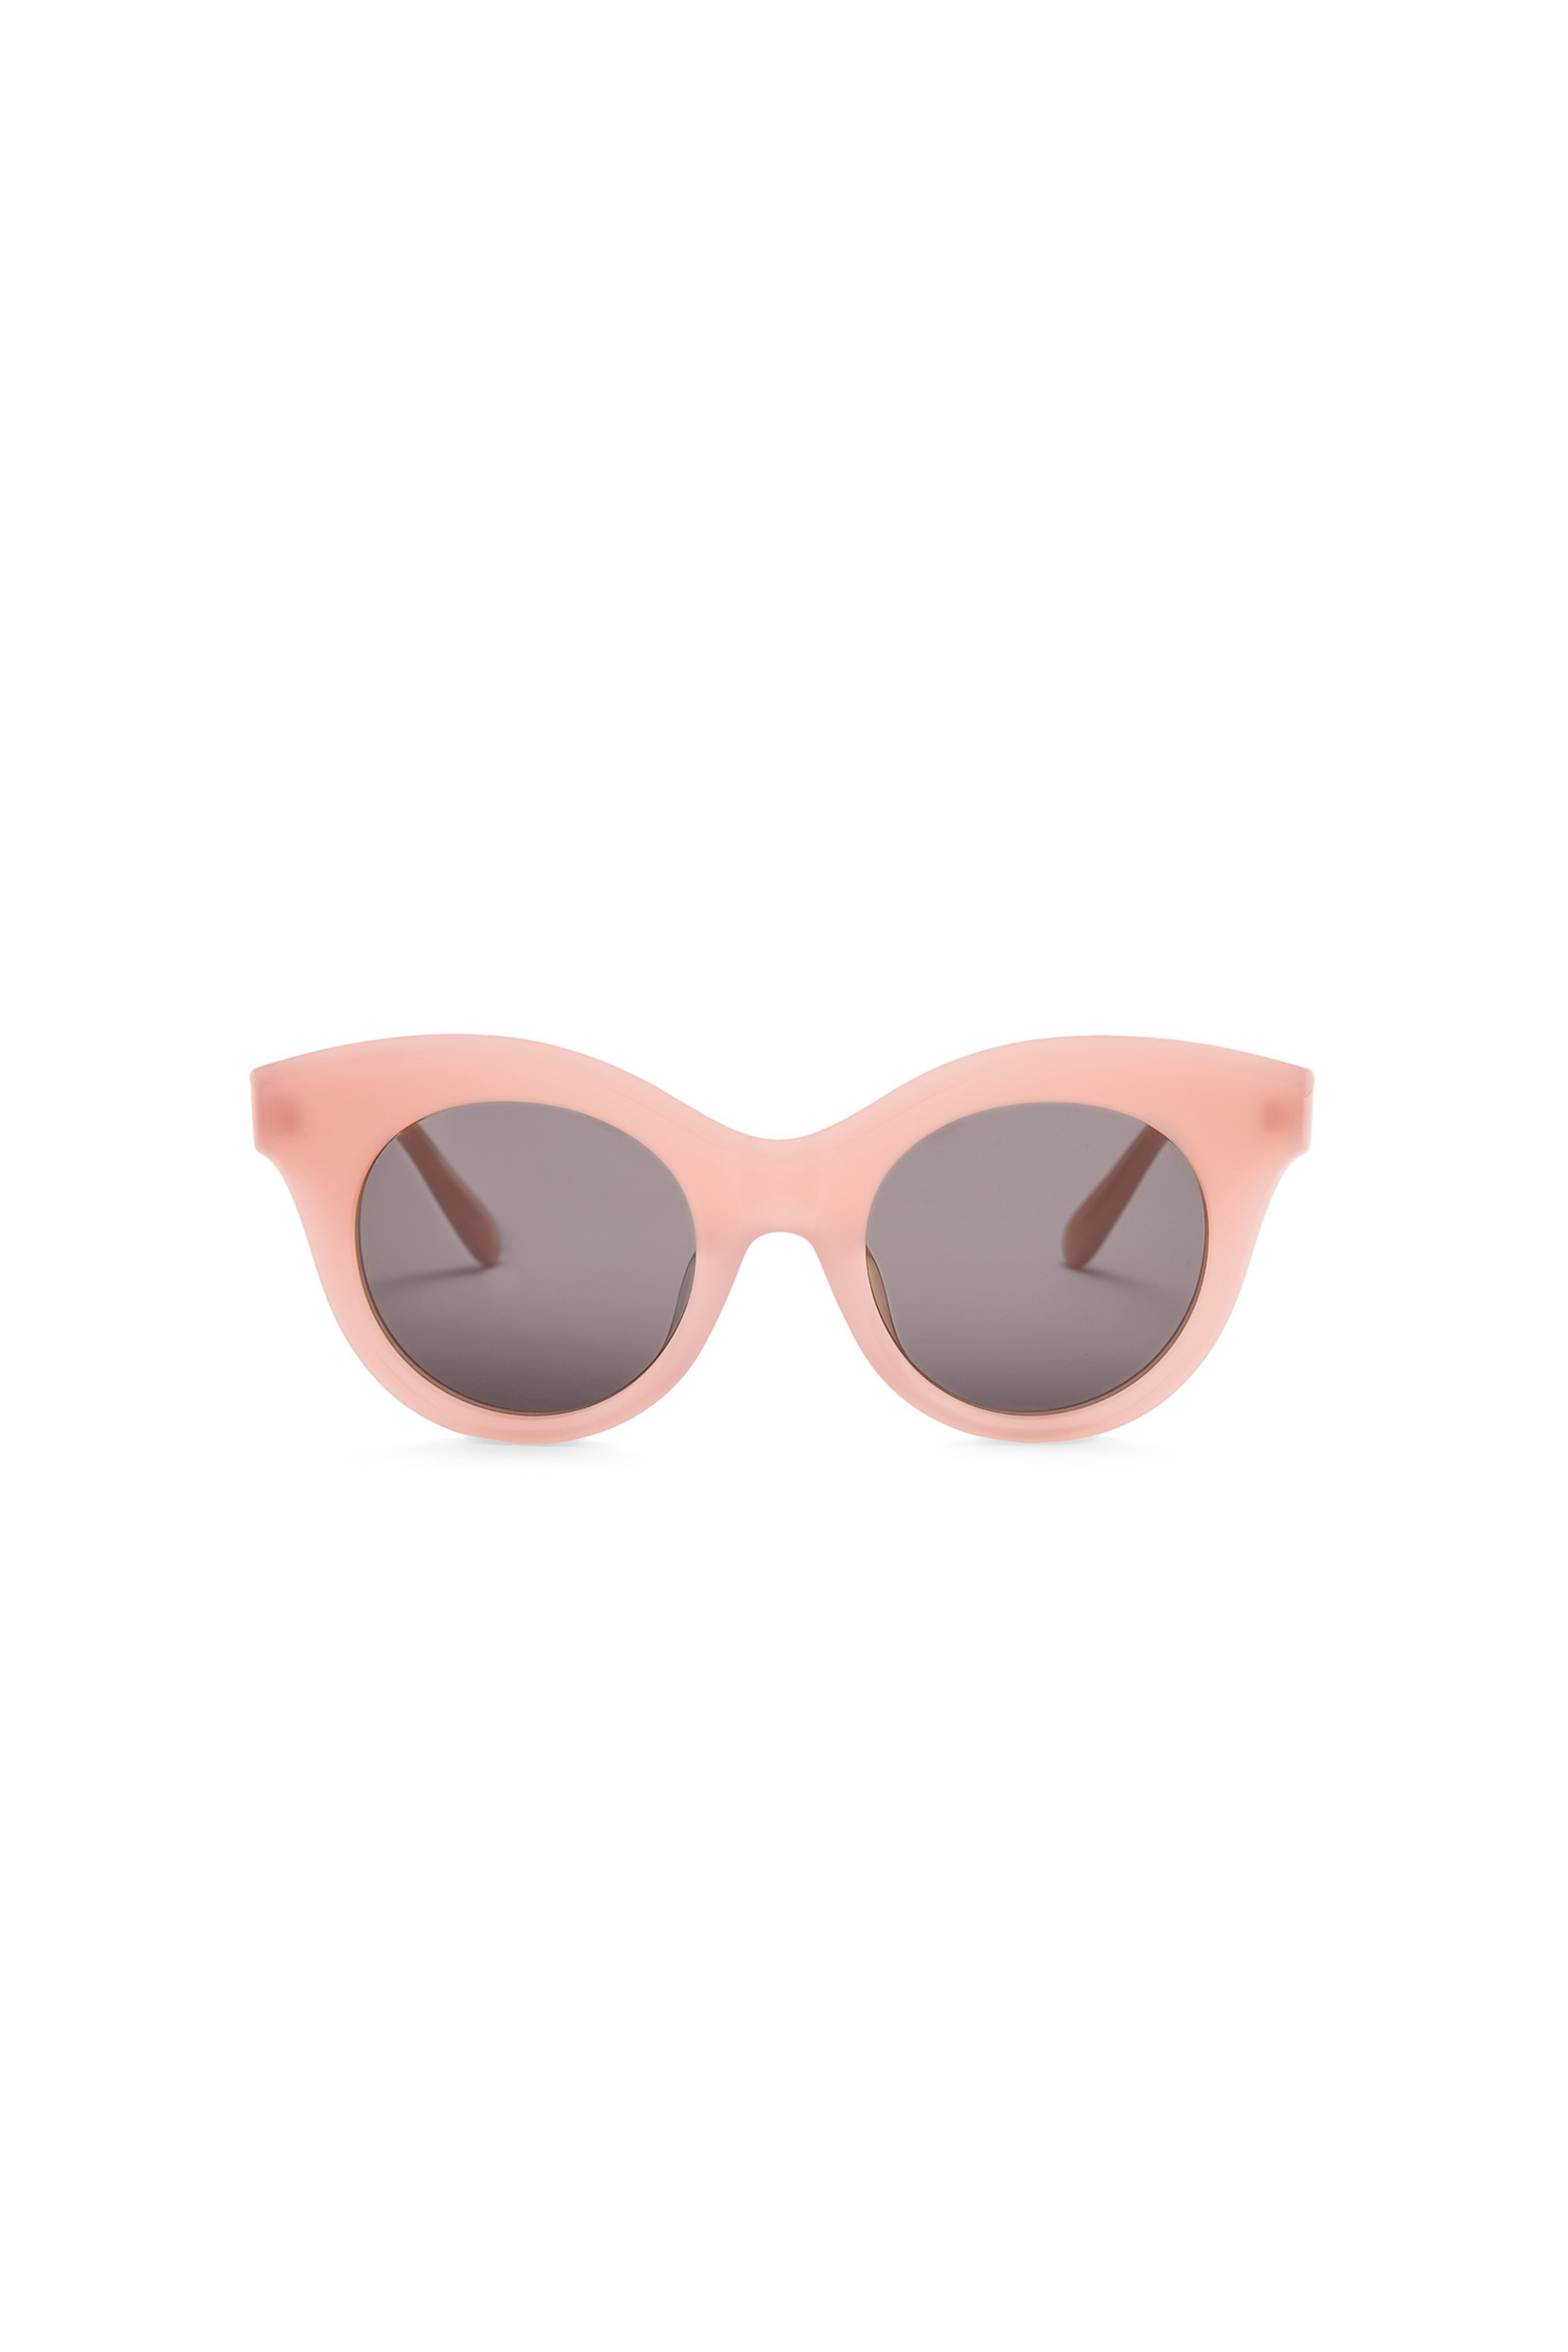 LOEWE Curvy Cat Eye Sunglasses